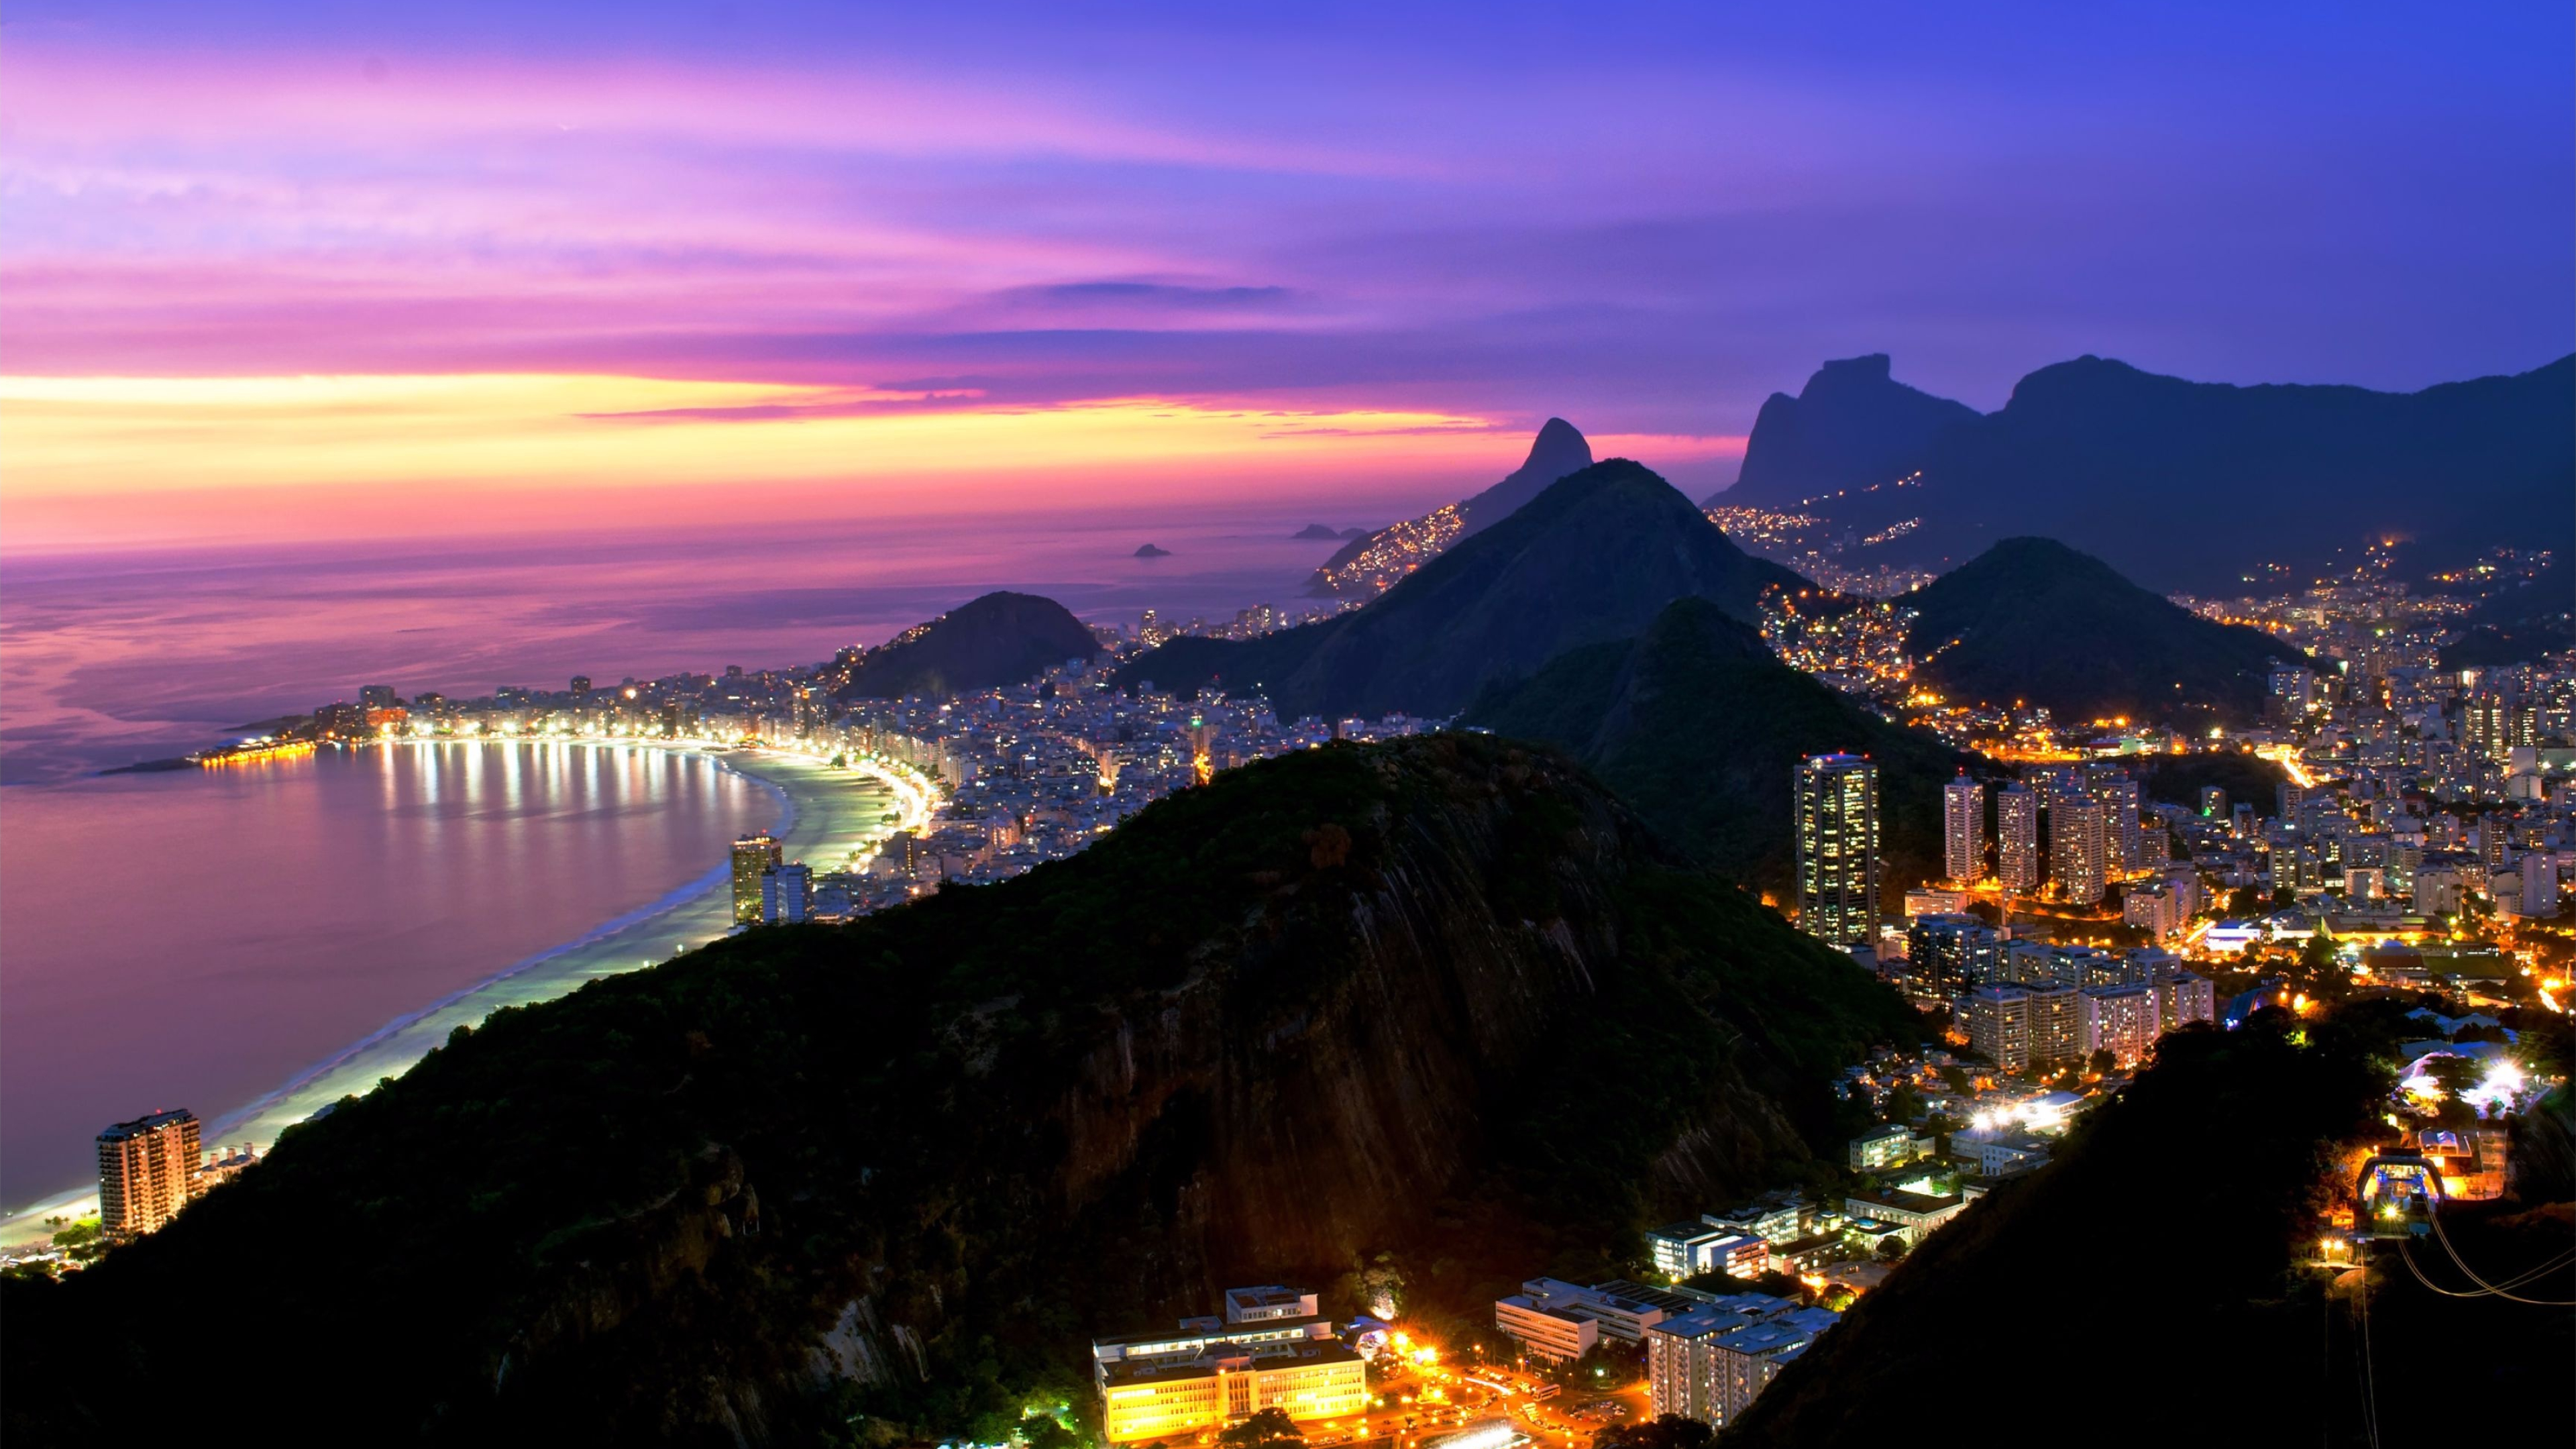 72 Brazil wallpapers, Diverse landscapes, South American charm, Visual delight, 3840x2160 4K Desktop